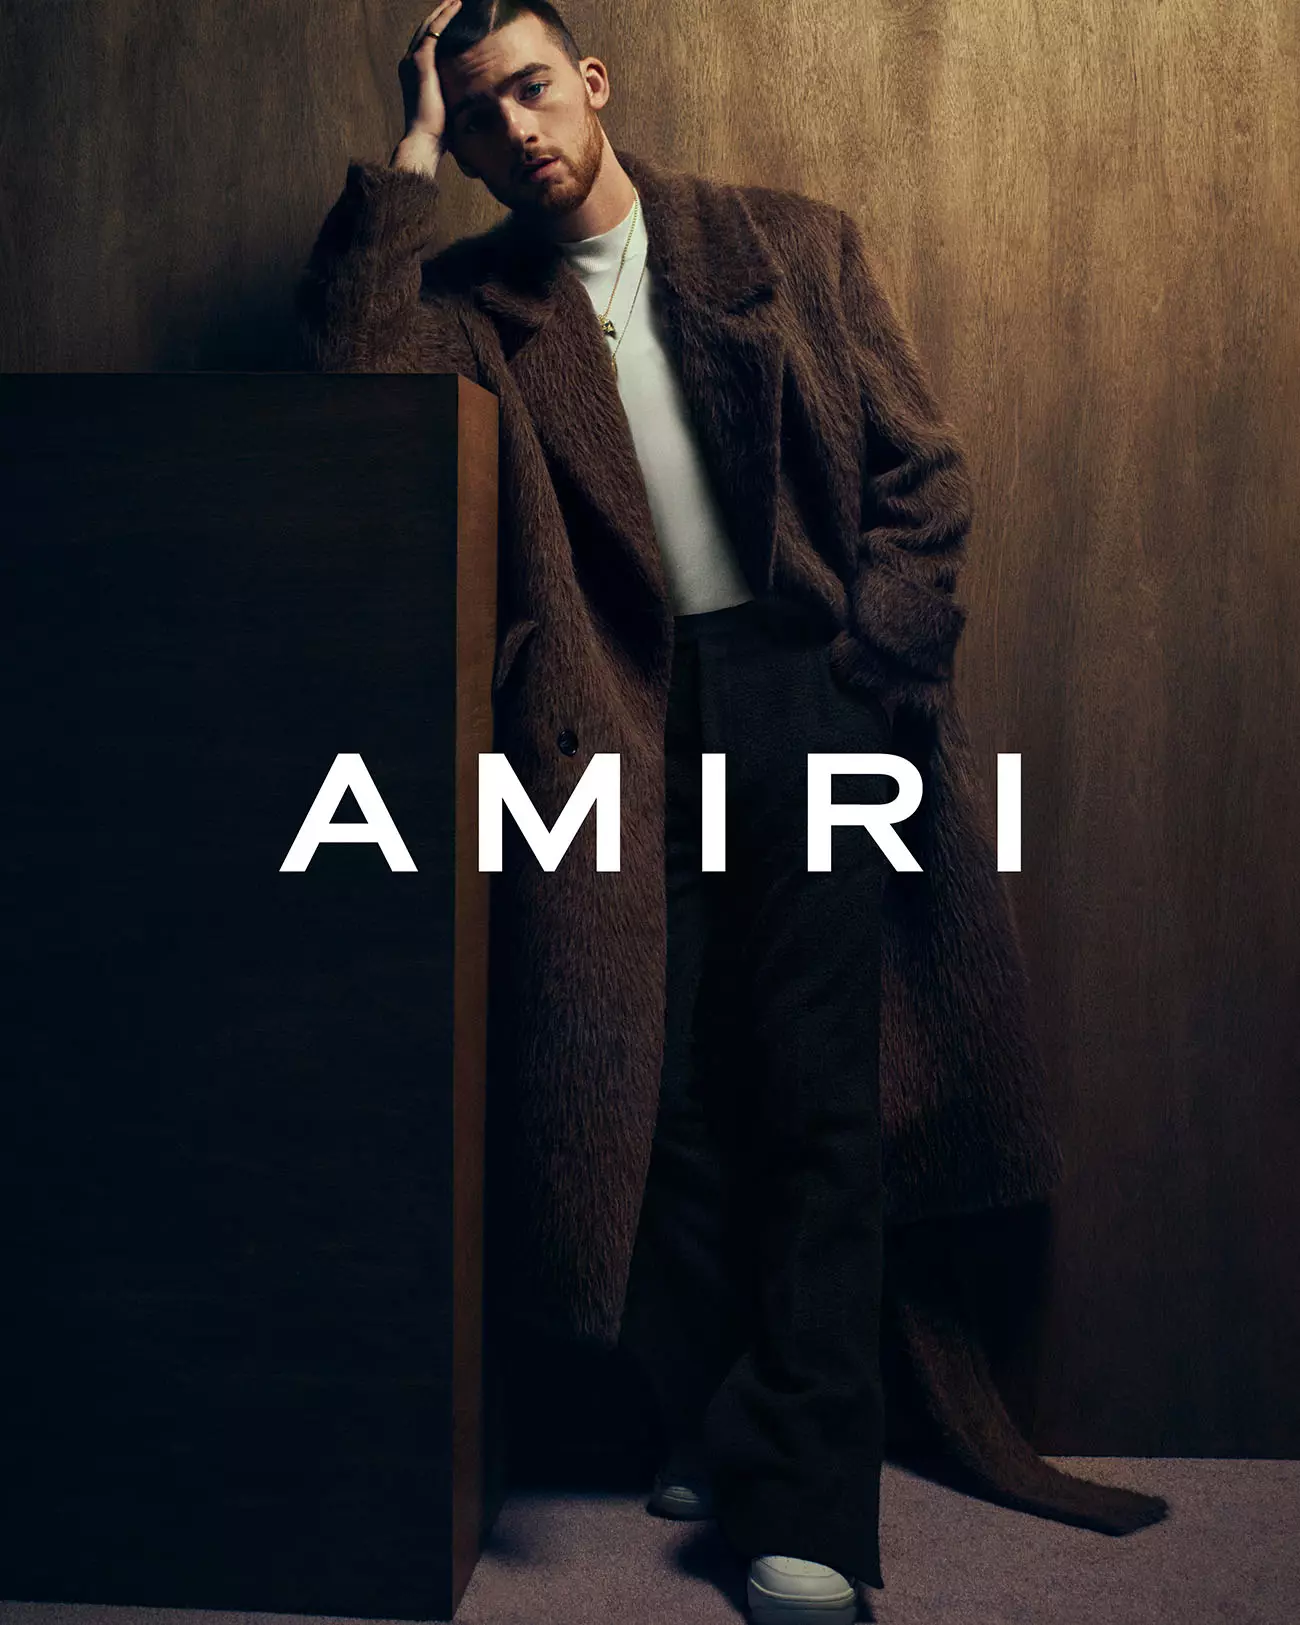 AMIRI x Angus Cloud - Icon Campaign